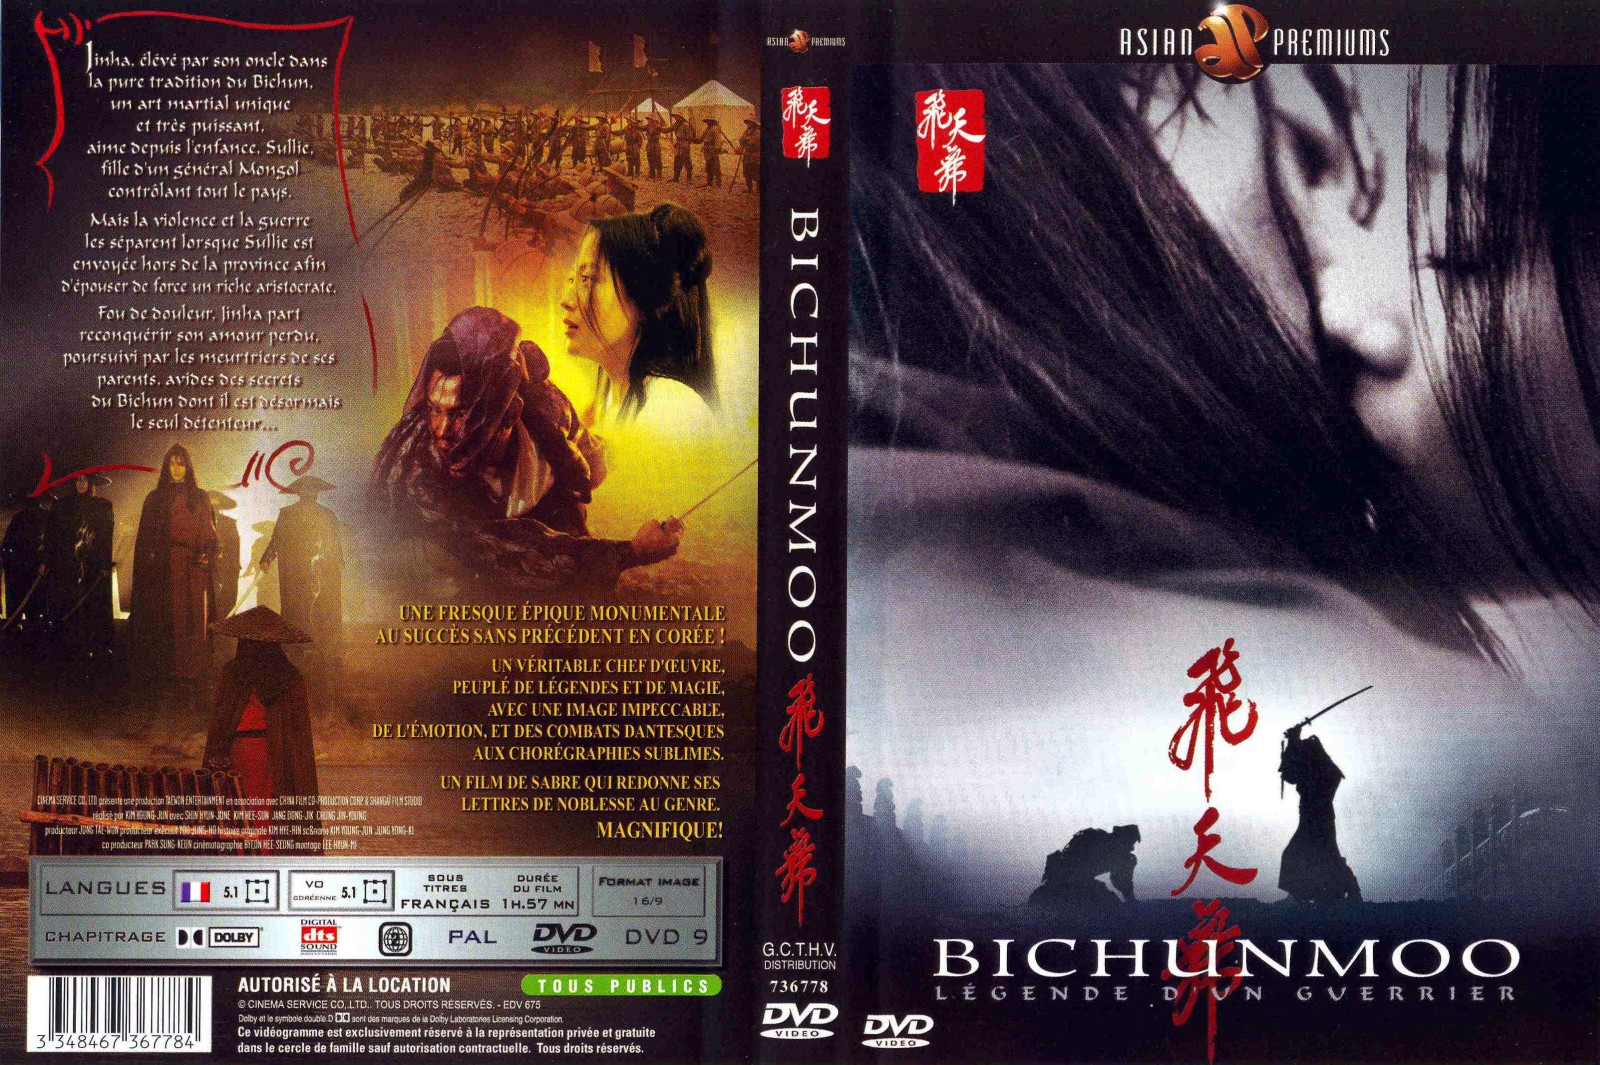 Jaquette DVD Bichunmoo v2